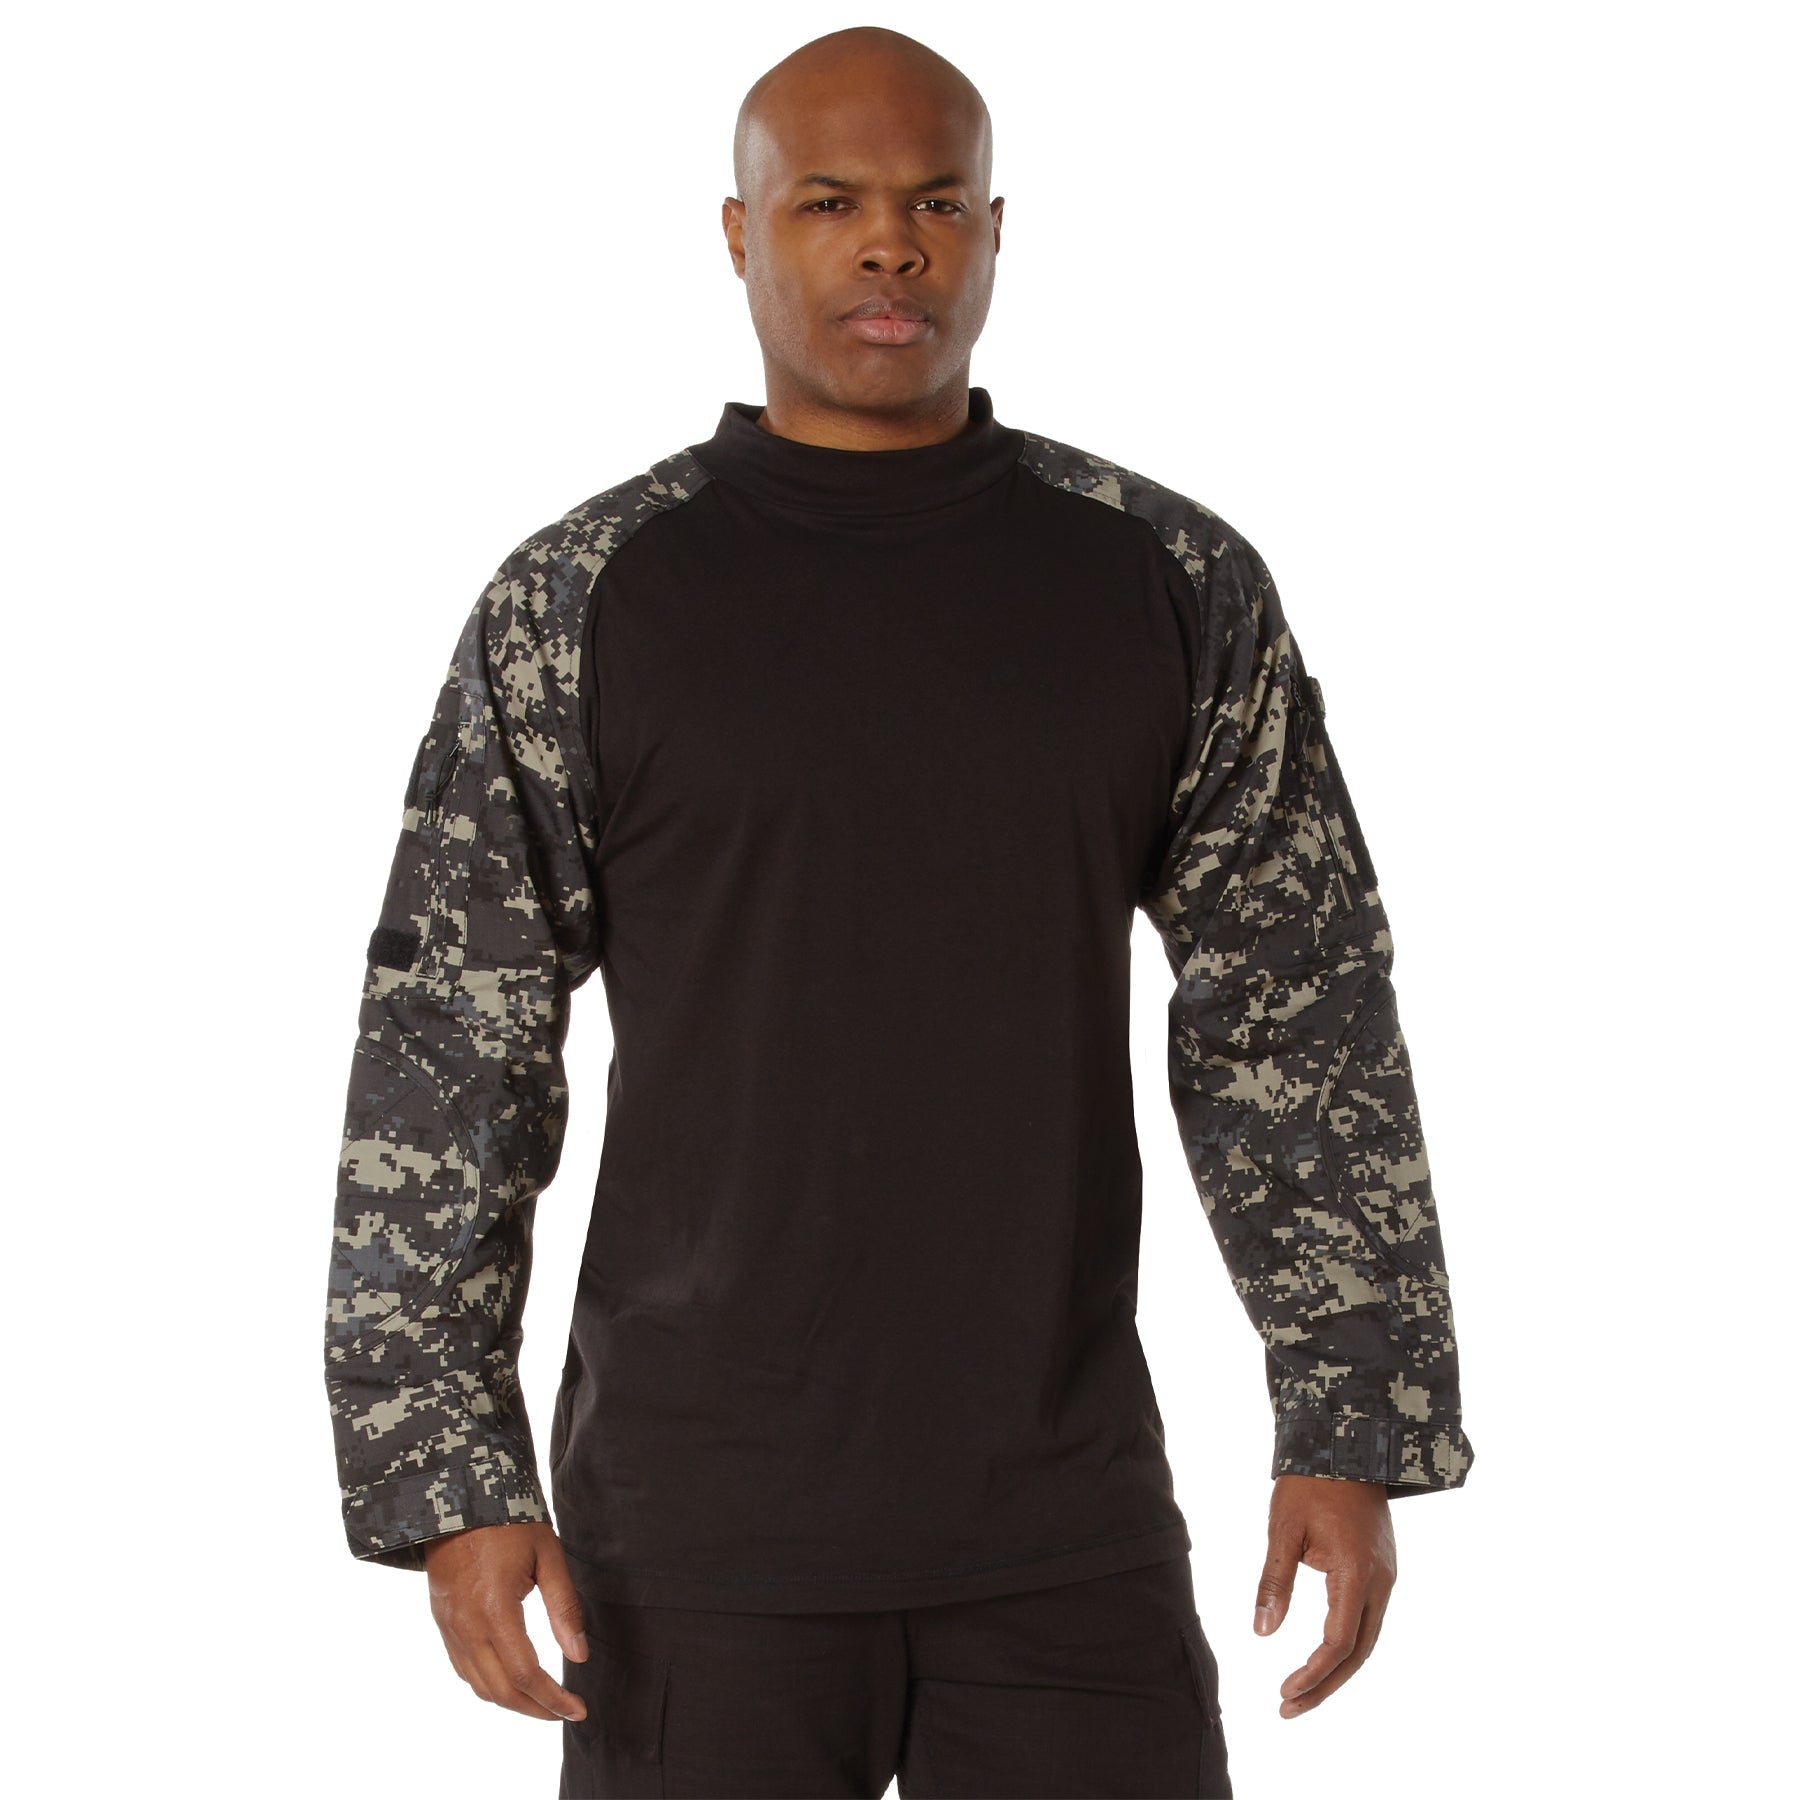 [Military][Fire Retardant] Digital Camo Acrylic/Cotton/Nylon/Cotton Combat Shirts Subdued Urban Digital Camo